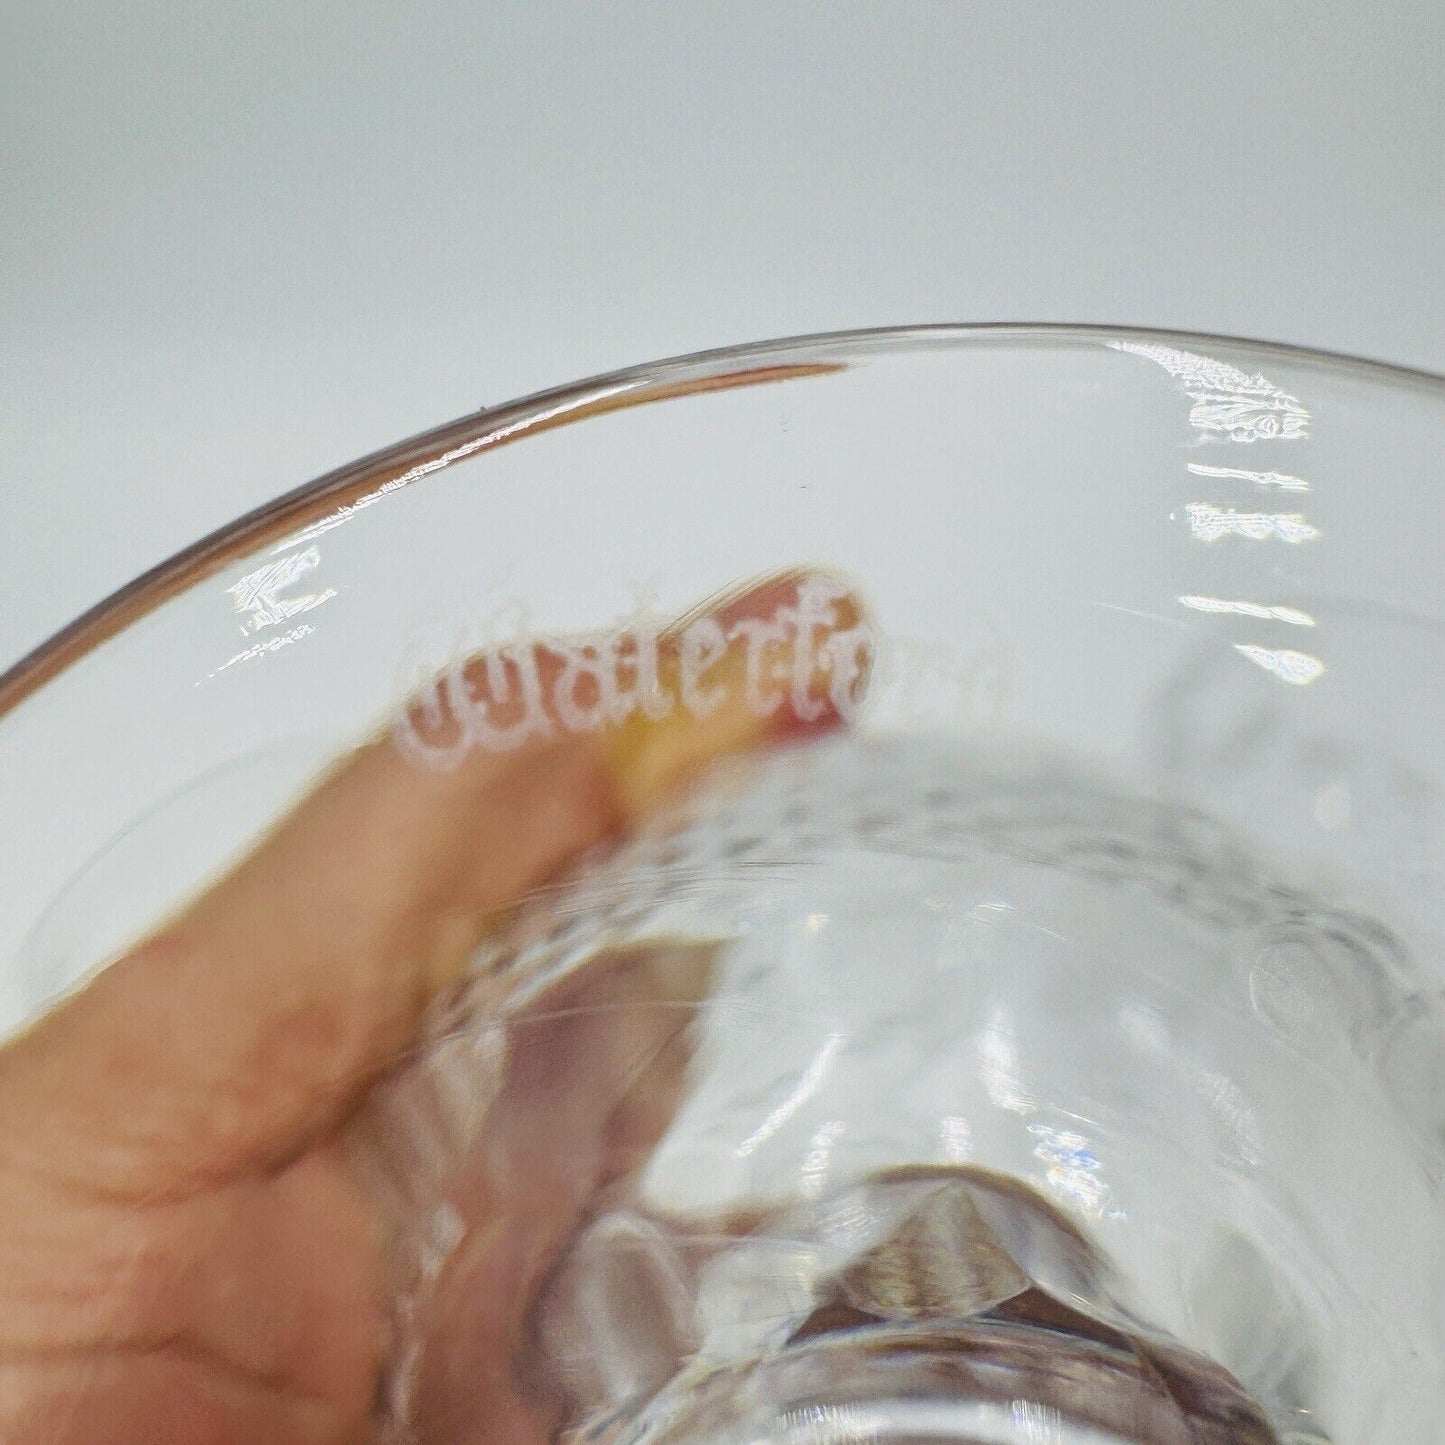 Waterford Crystal Colleen Short Stem Wine 3 Oz Set 4 Wine Glasses 5” Vintage